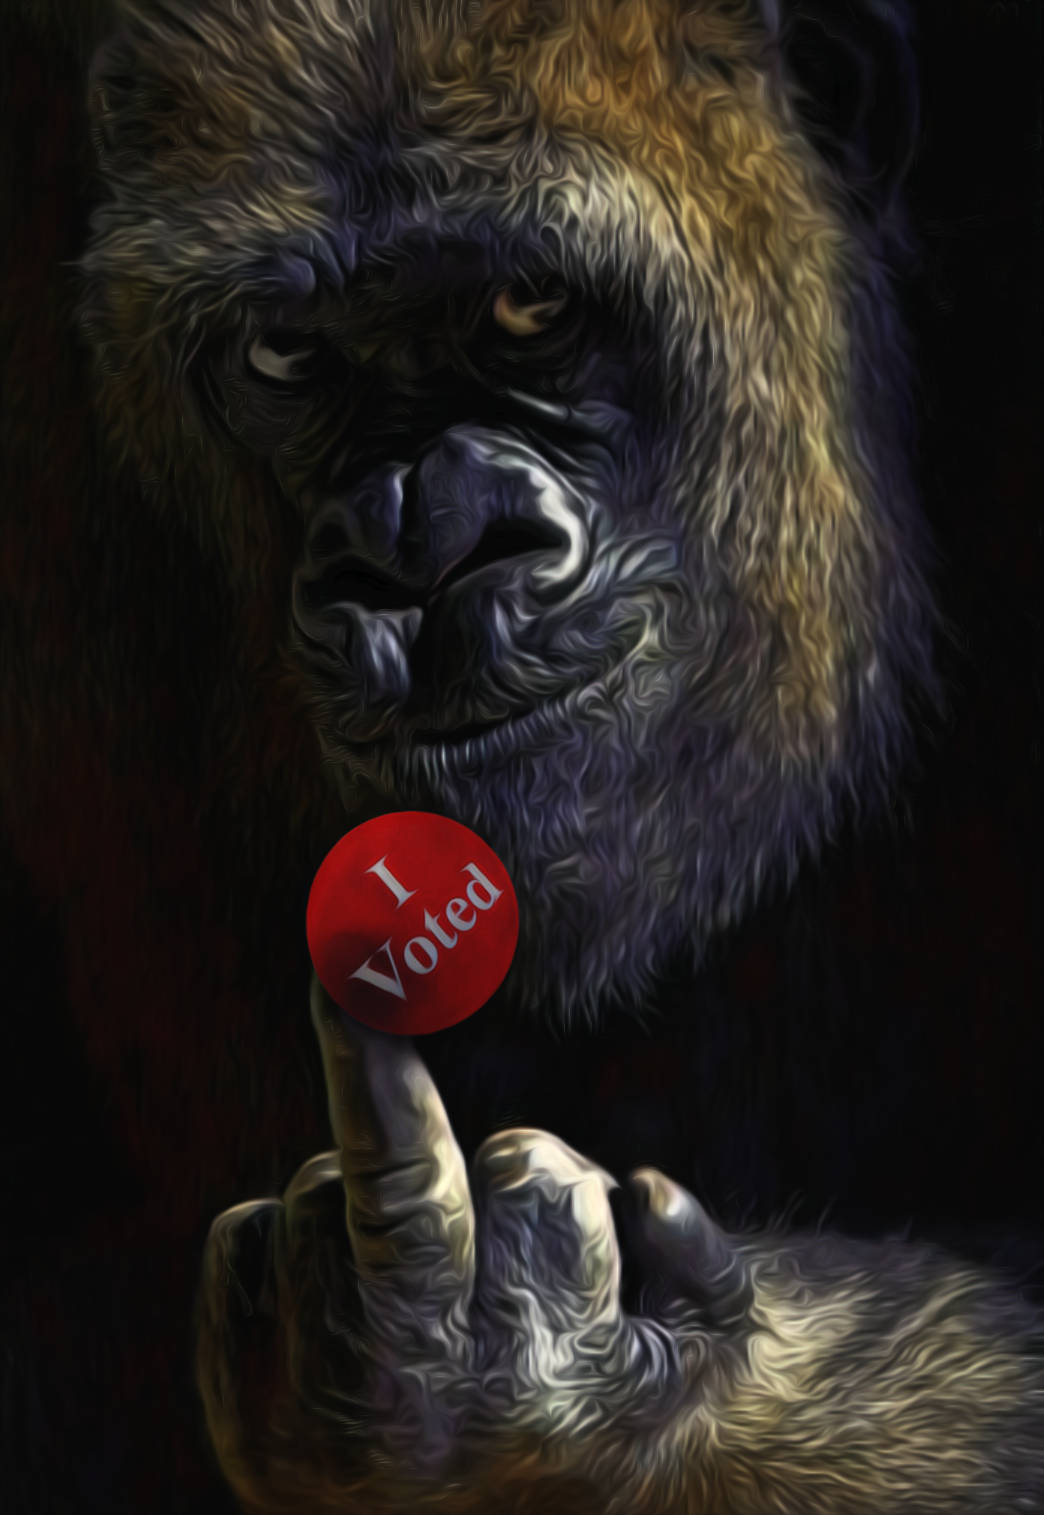 Gorilla Art I Voted Wallpaper